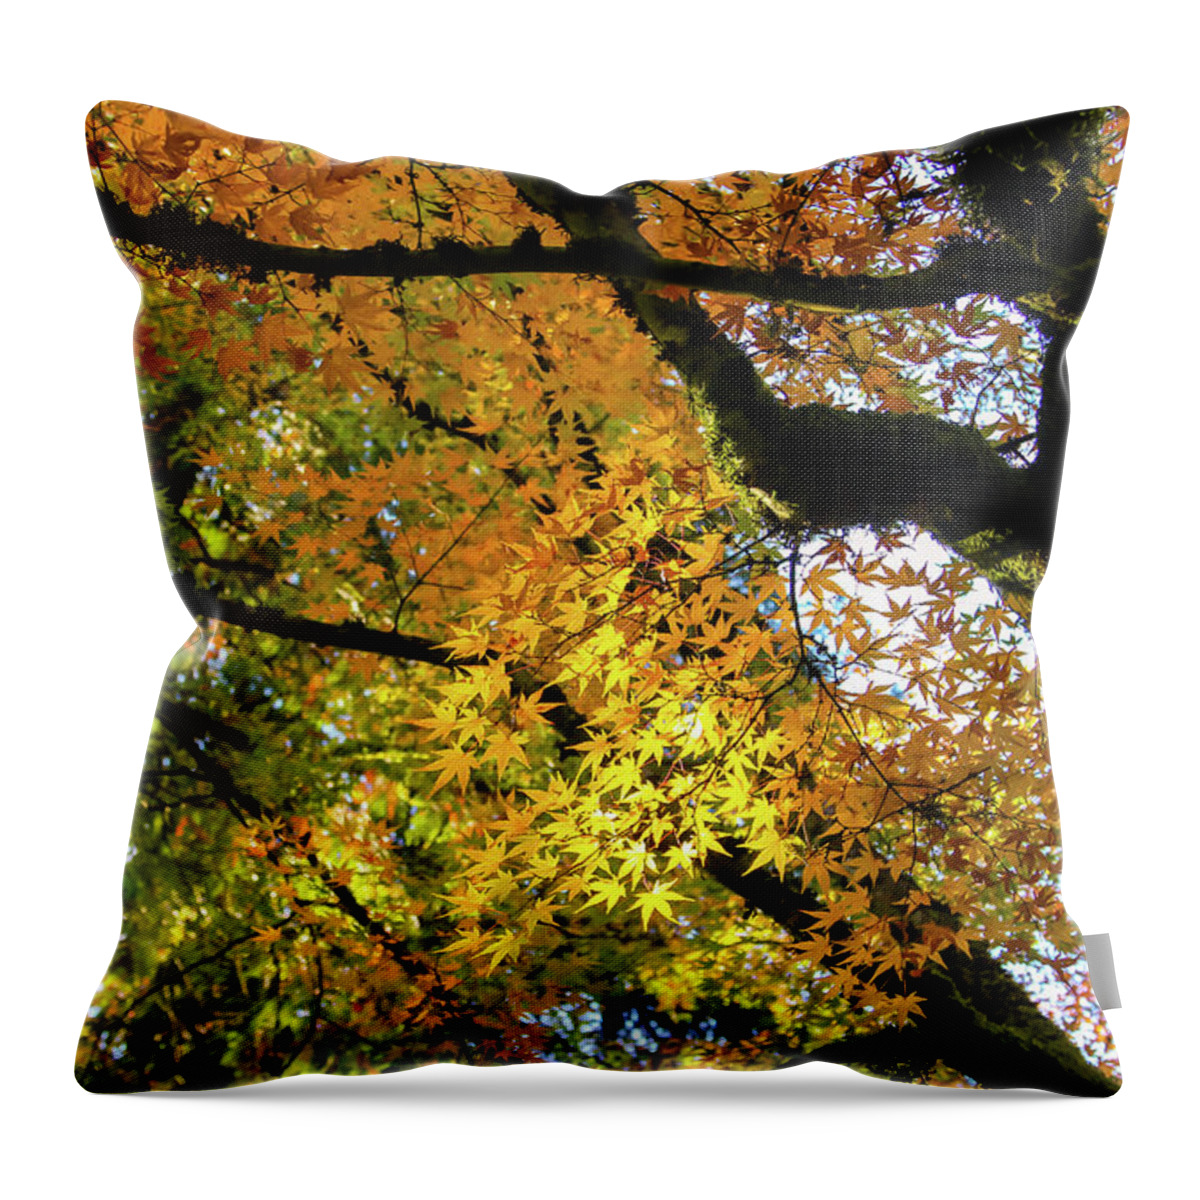 Autumn Throw Pillow featuring the photograph Maple Tree in Autumn by Aashish Vaidya